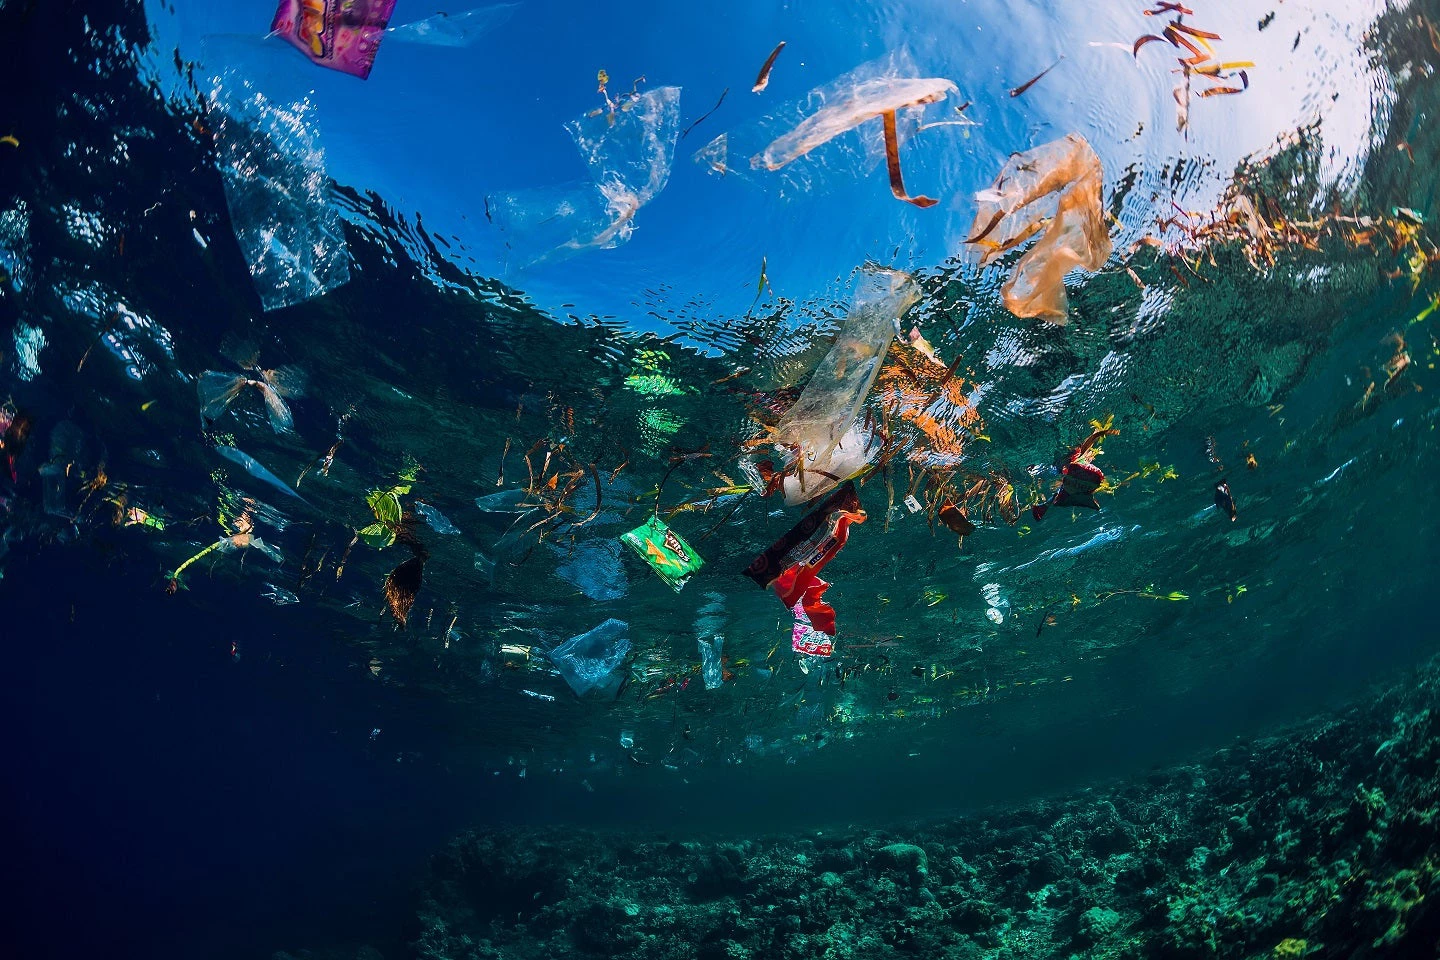 Underwater ocean with plastic and plastic bags.